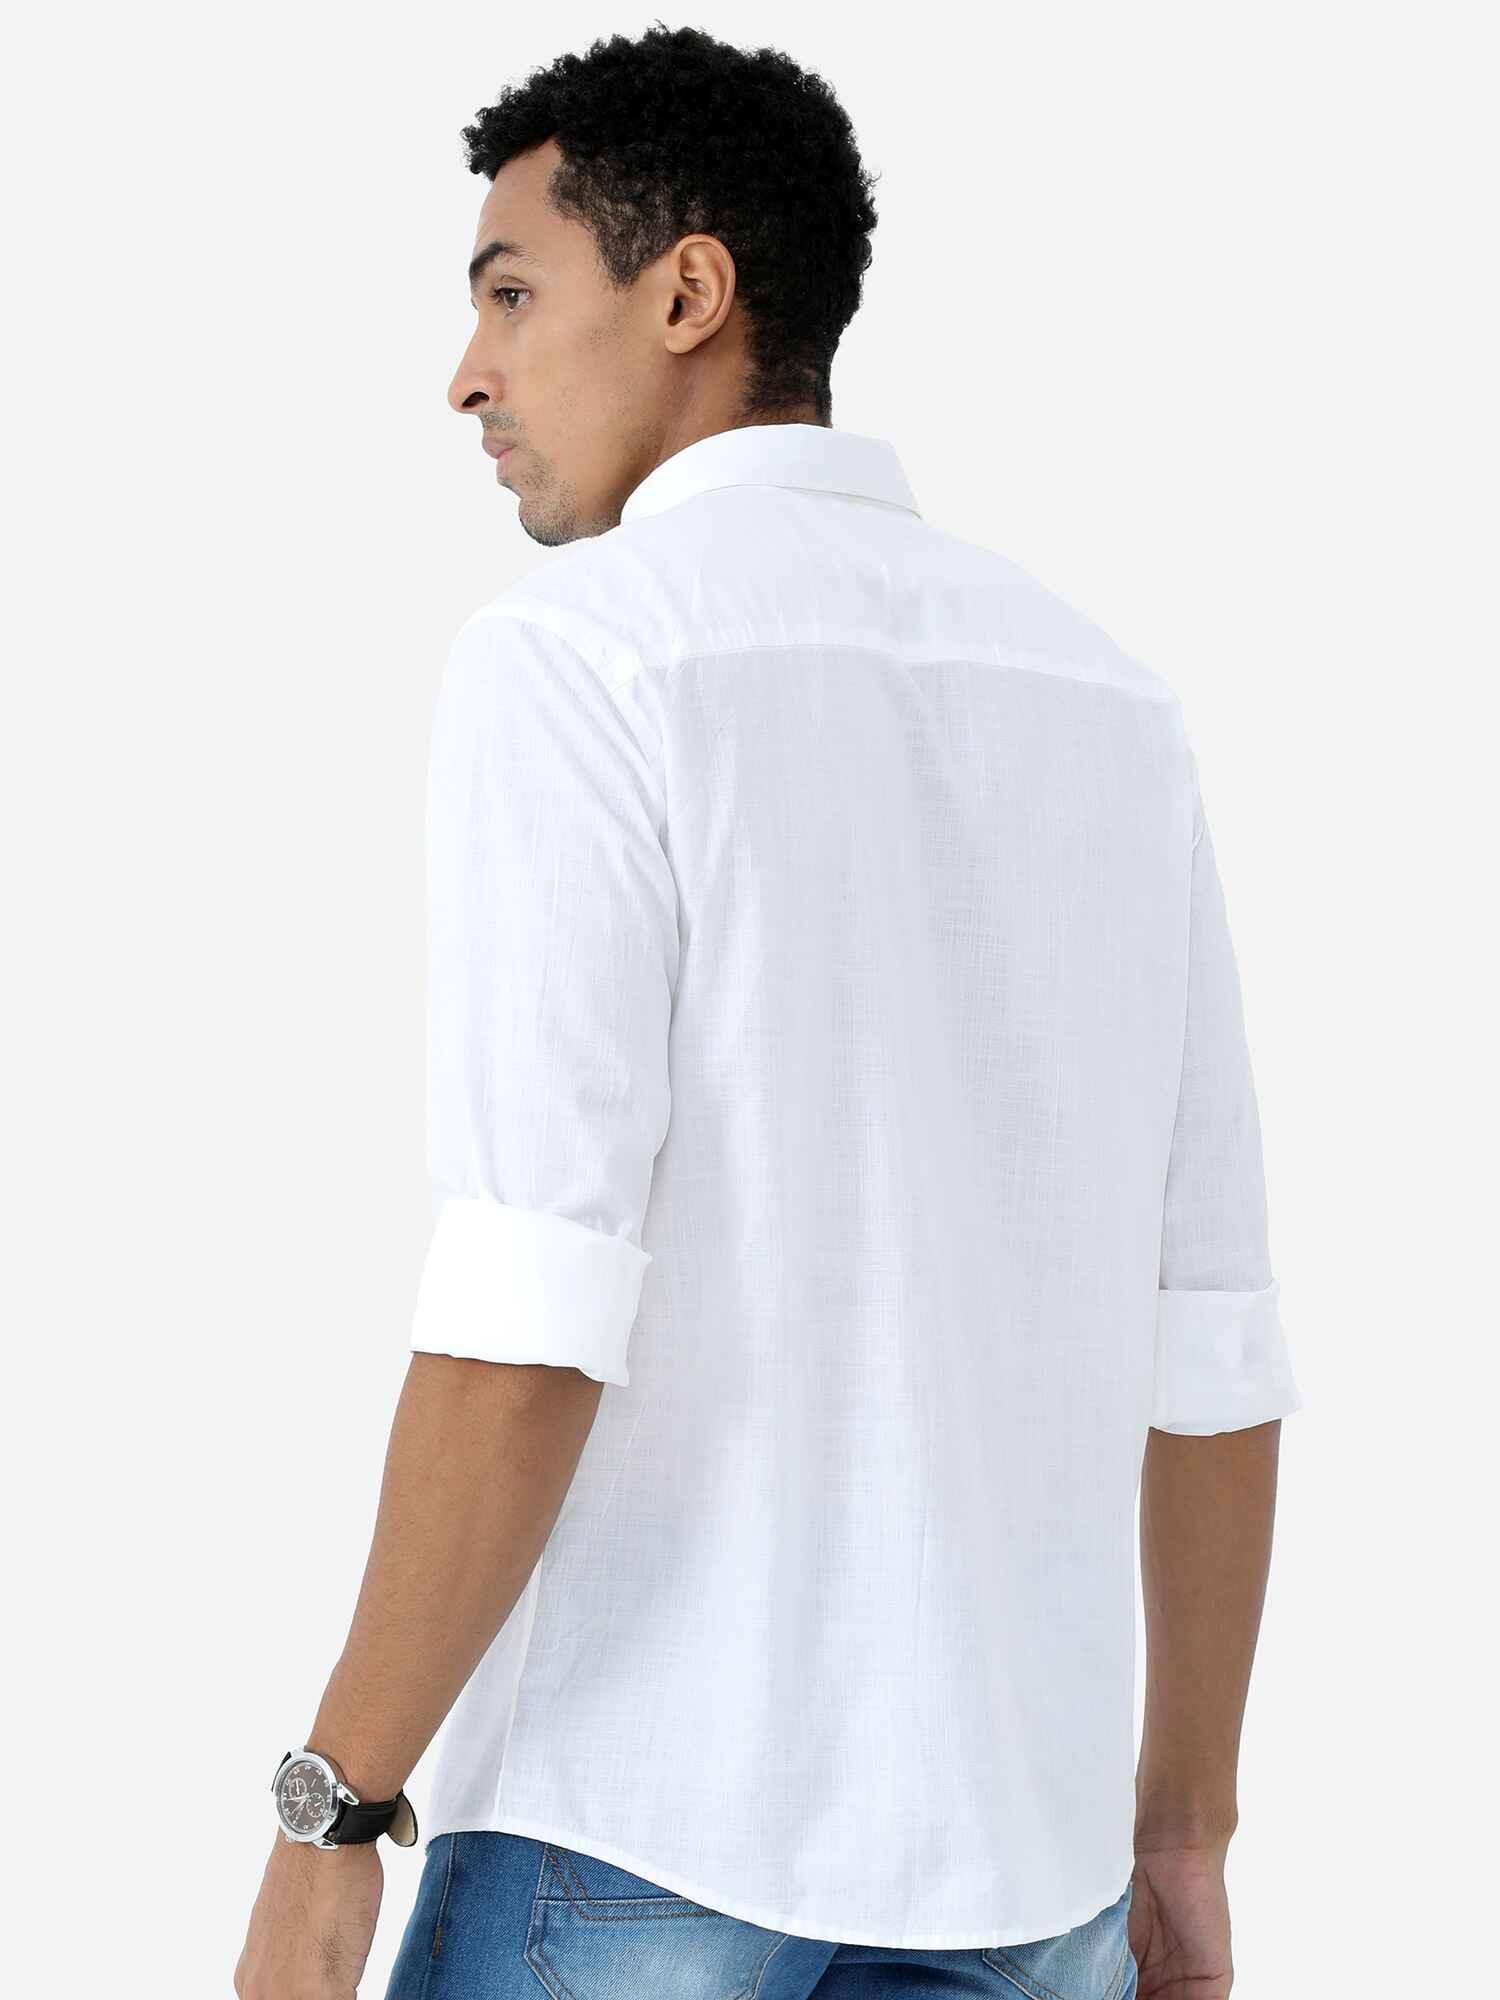 White Solid Cotton Full Sleeve Shirt - Guniaa Fashions